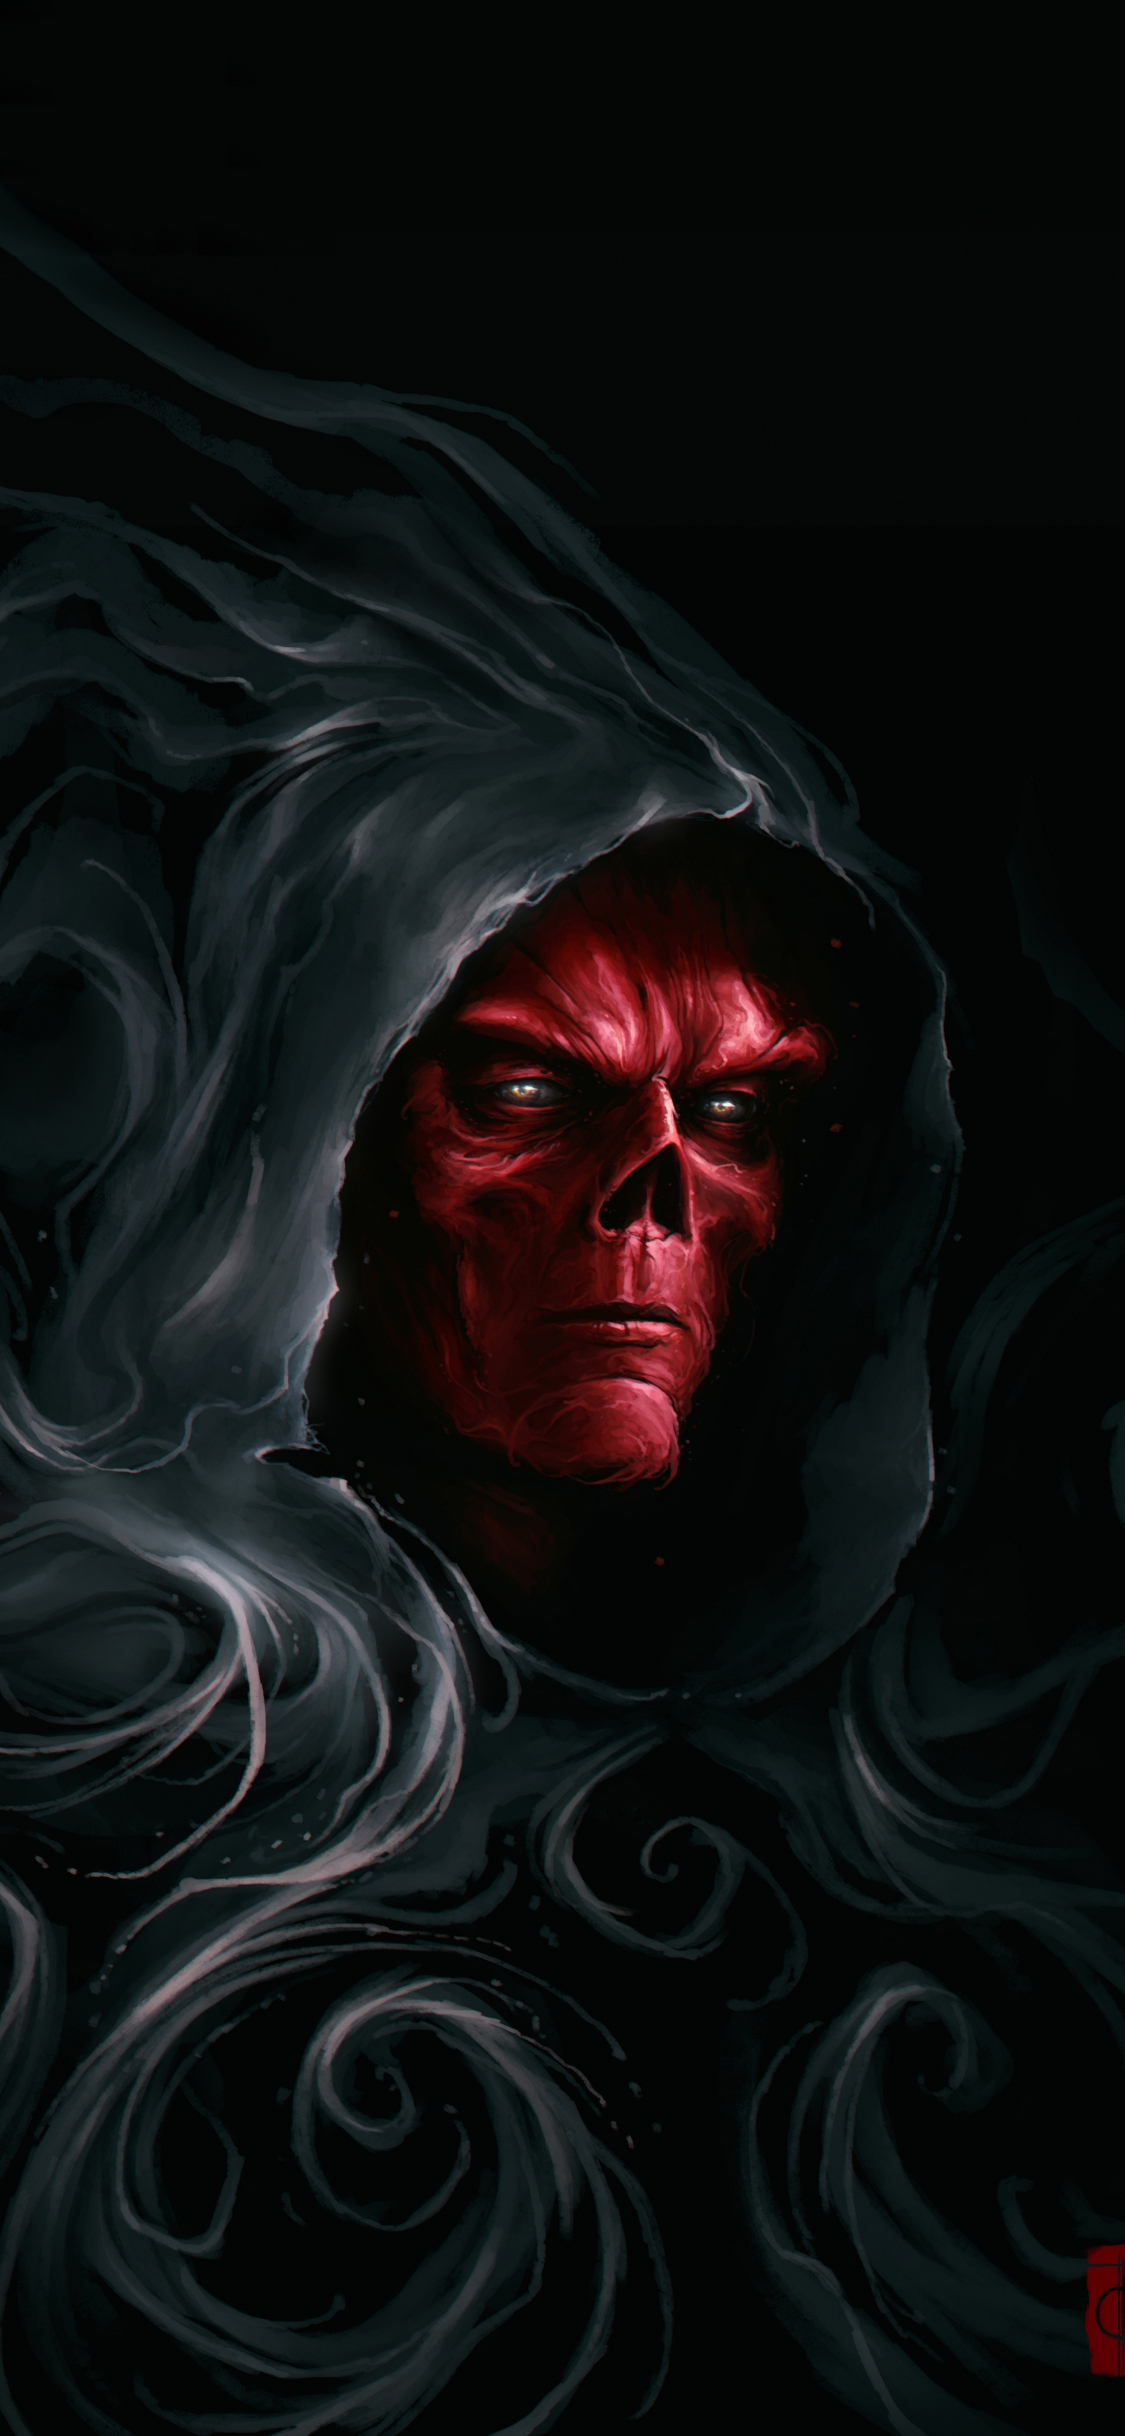 Download wallpaper x stone keeper villain marvel red skull artwork iphone x x hd background